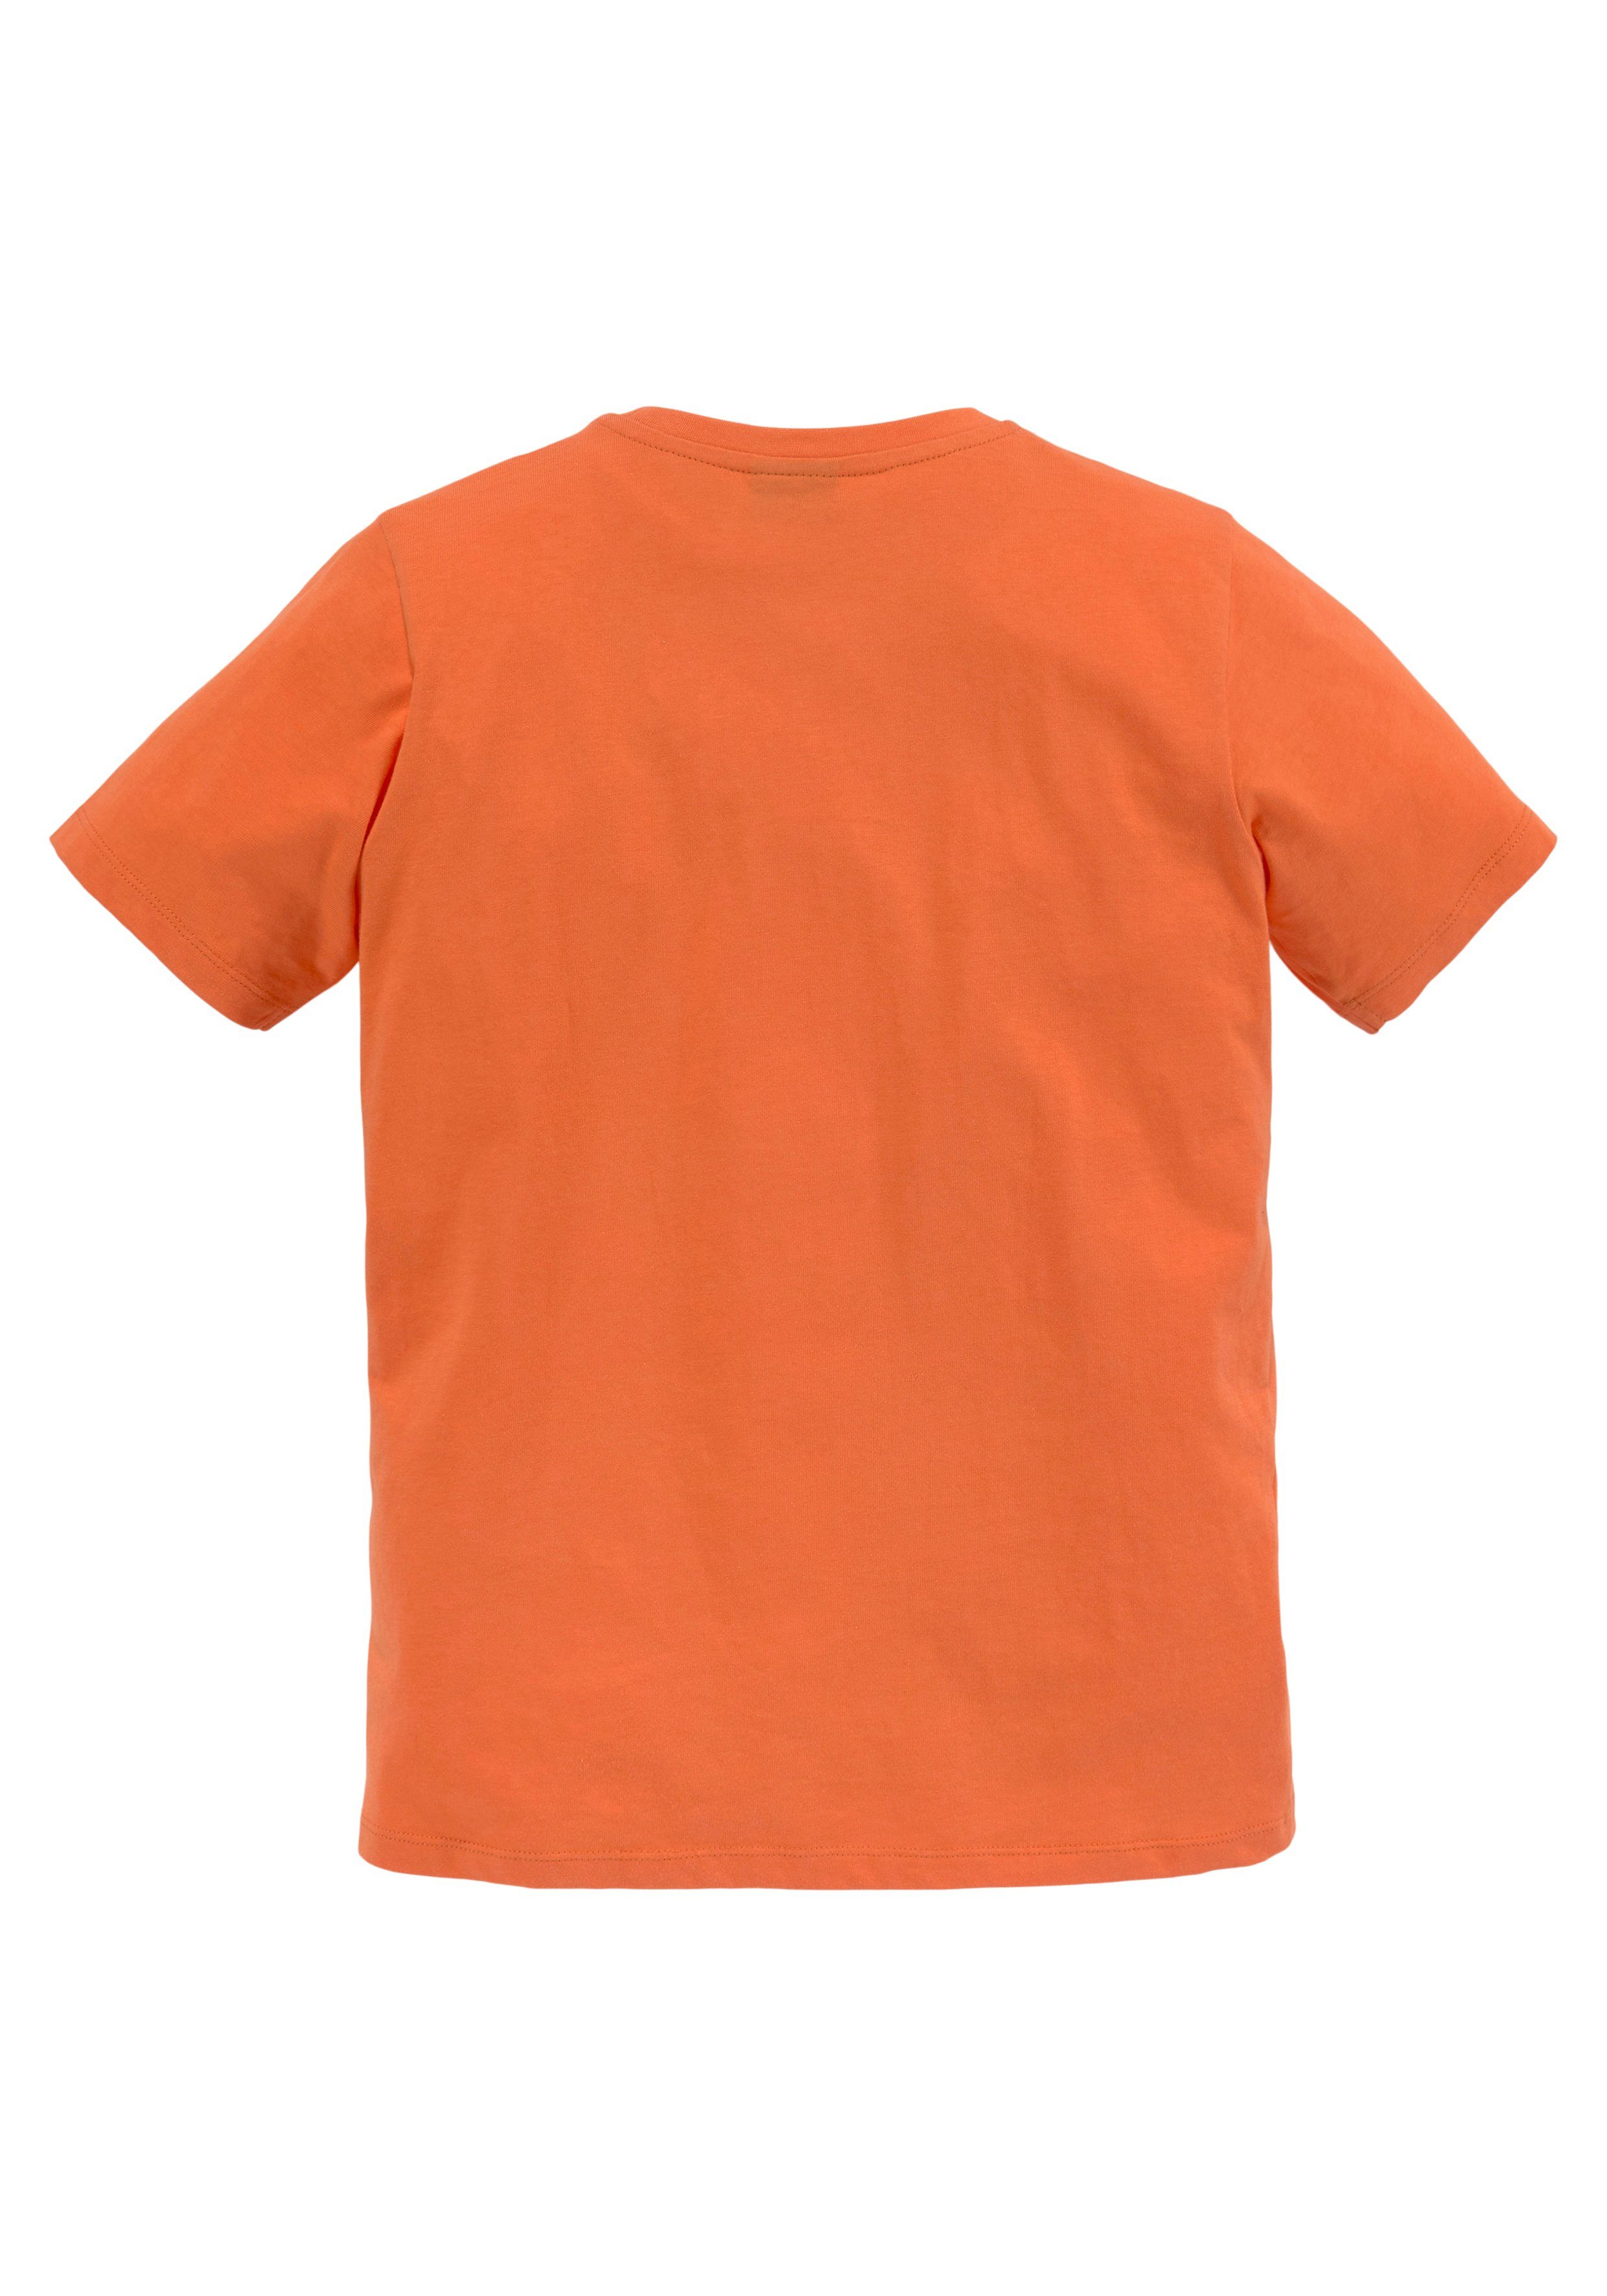 NEXT KIDSWORLD LEVEL T-Shirt